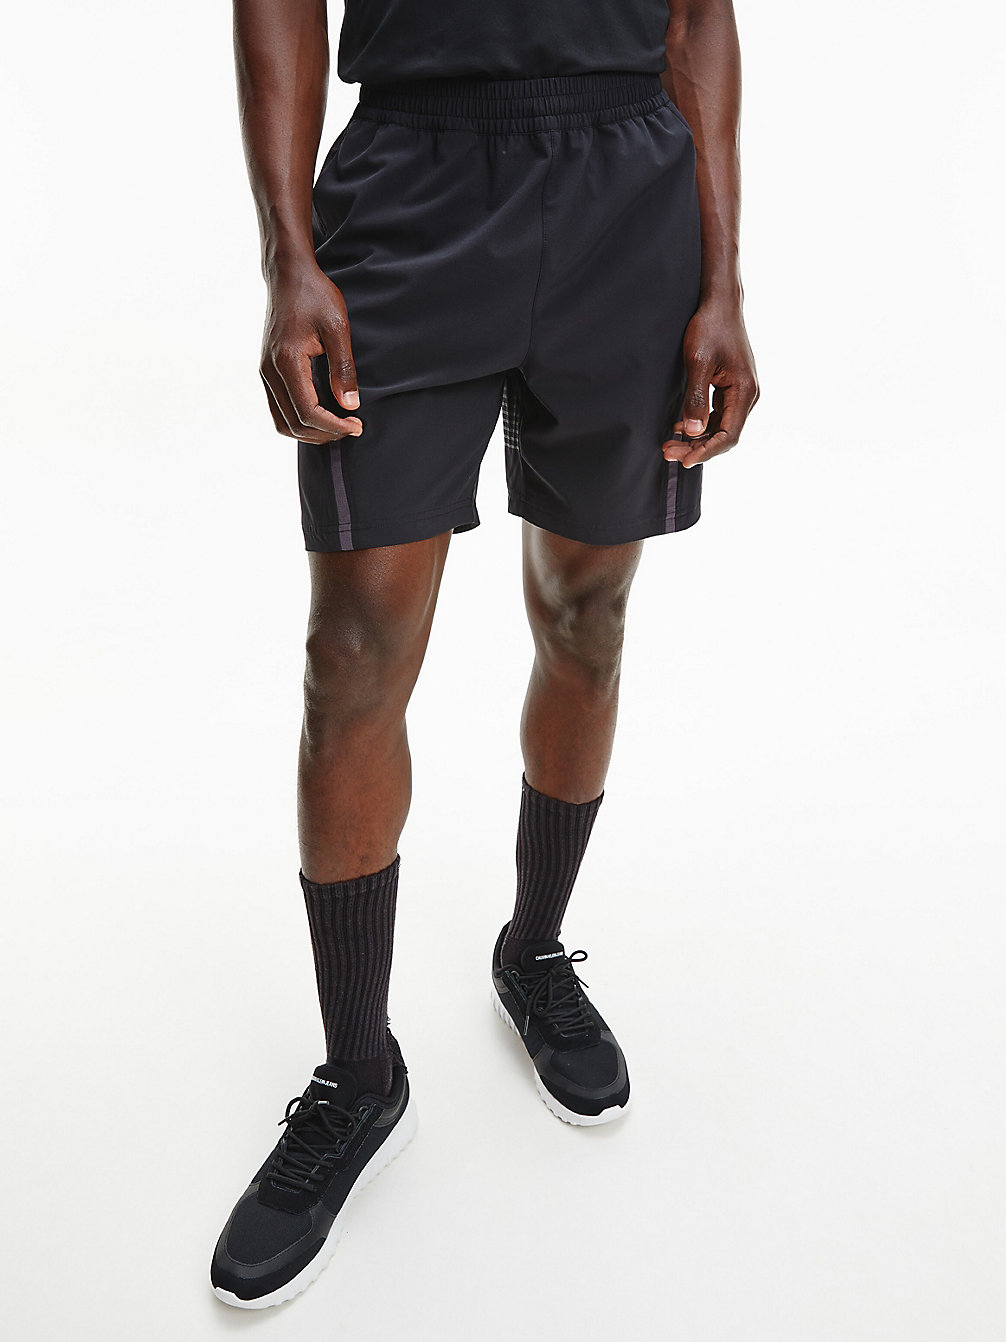 CK BLACK/ PERISCOPE/ACID LIME Kurze Sporthose undefined Herren Calvin Klein